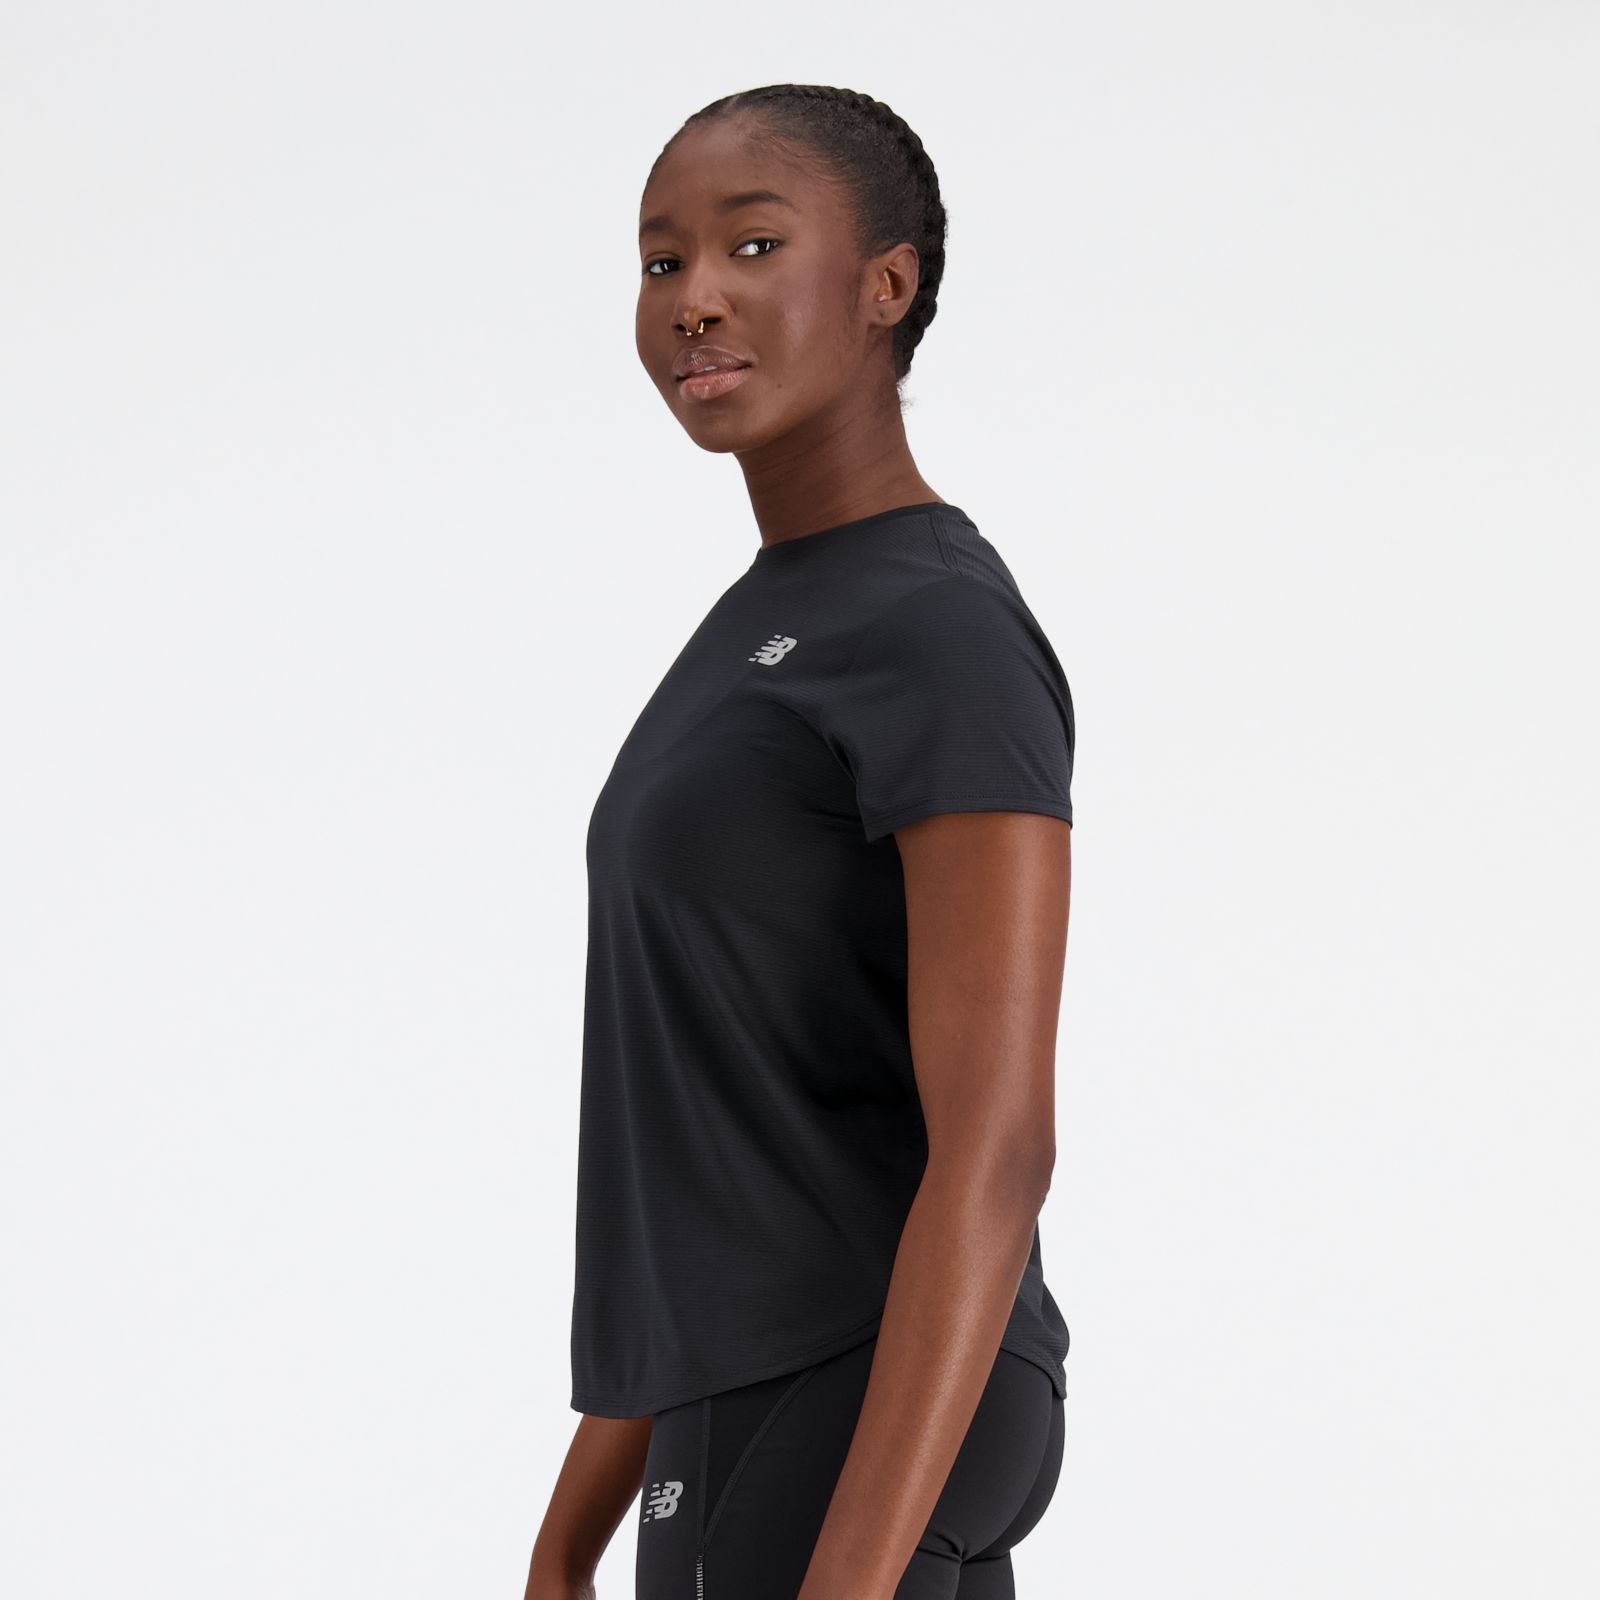 New Balance Accelerate - Coral - Camiseta Running Mujer talla XS